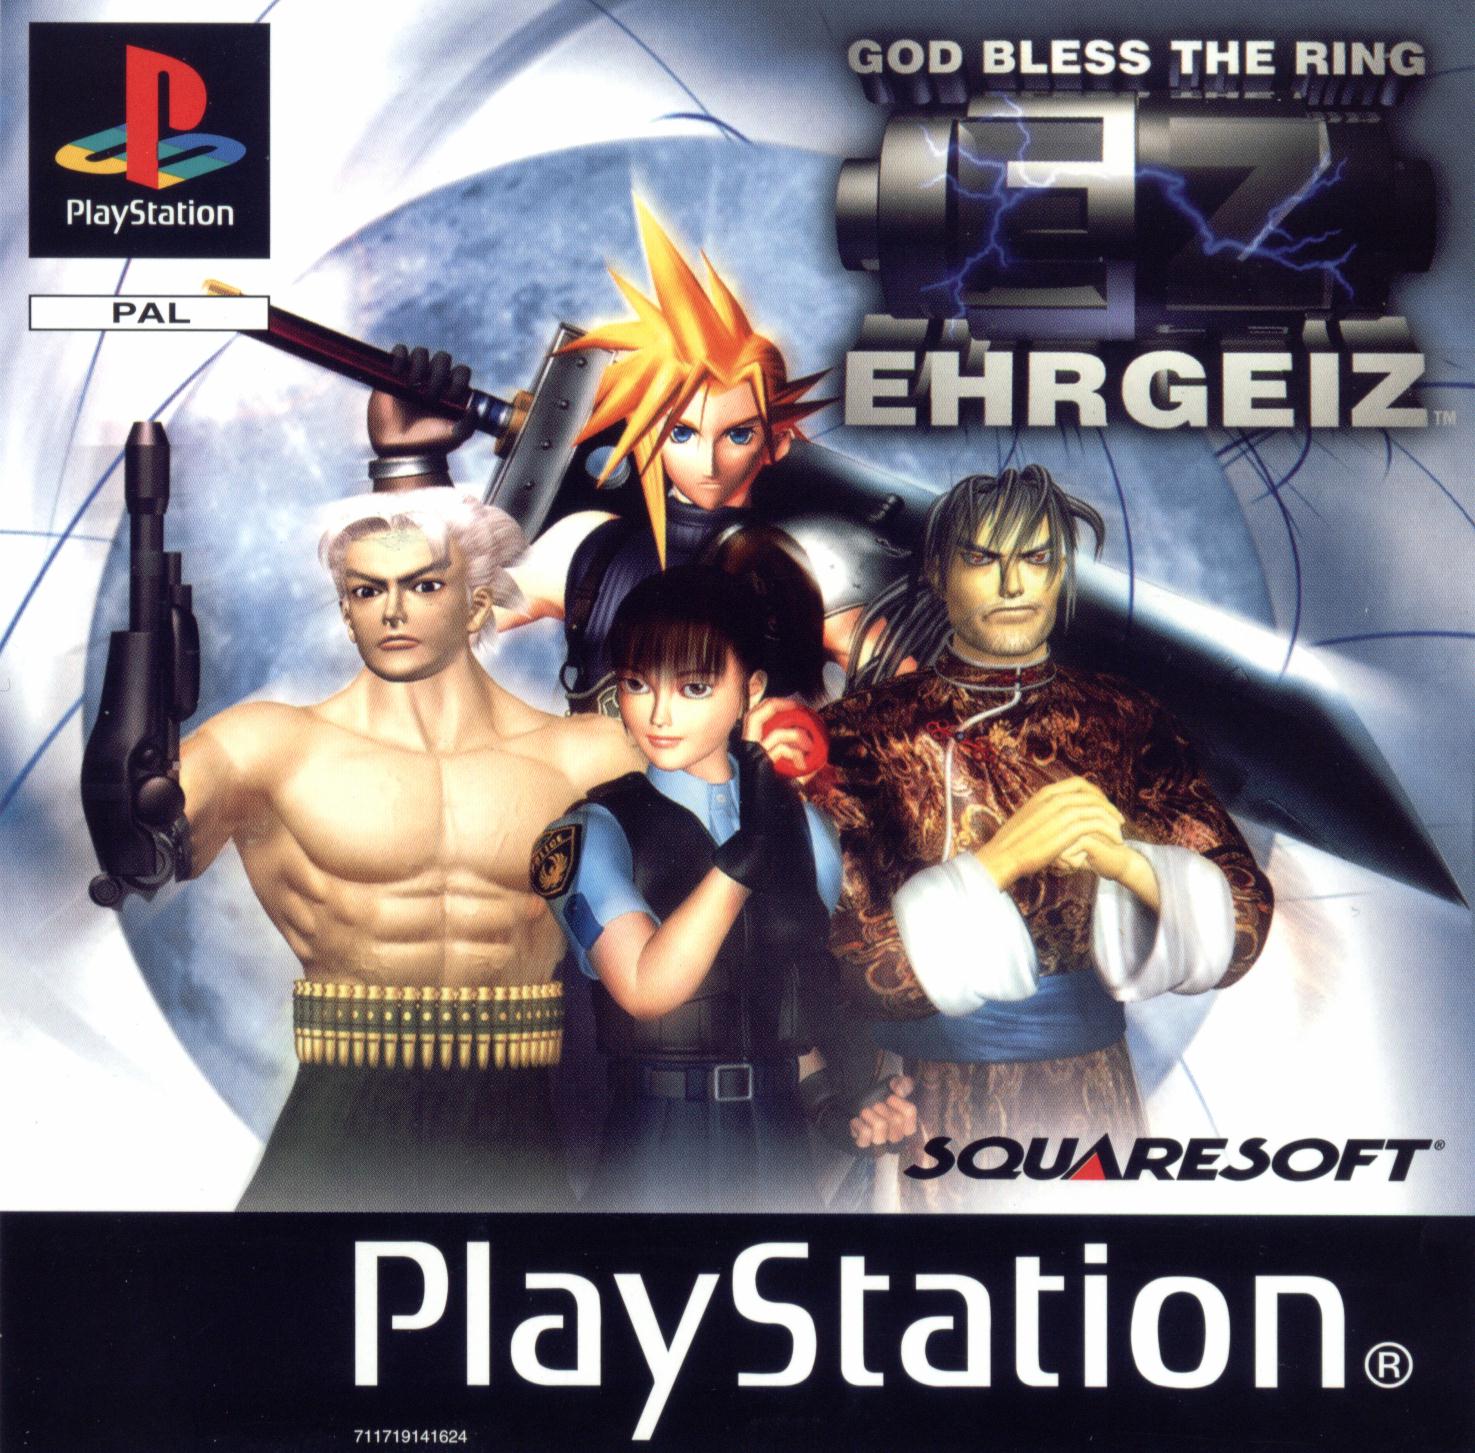 Ehrgeiz: God Bless the Ring [PS1] - Файтинг с участием героев Final Fantasy